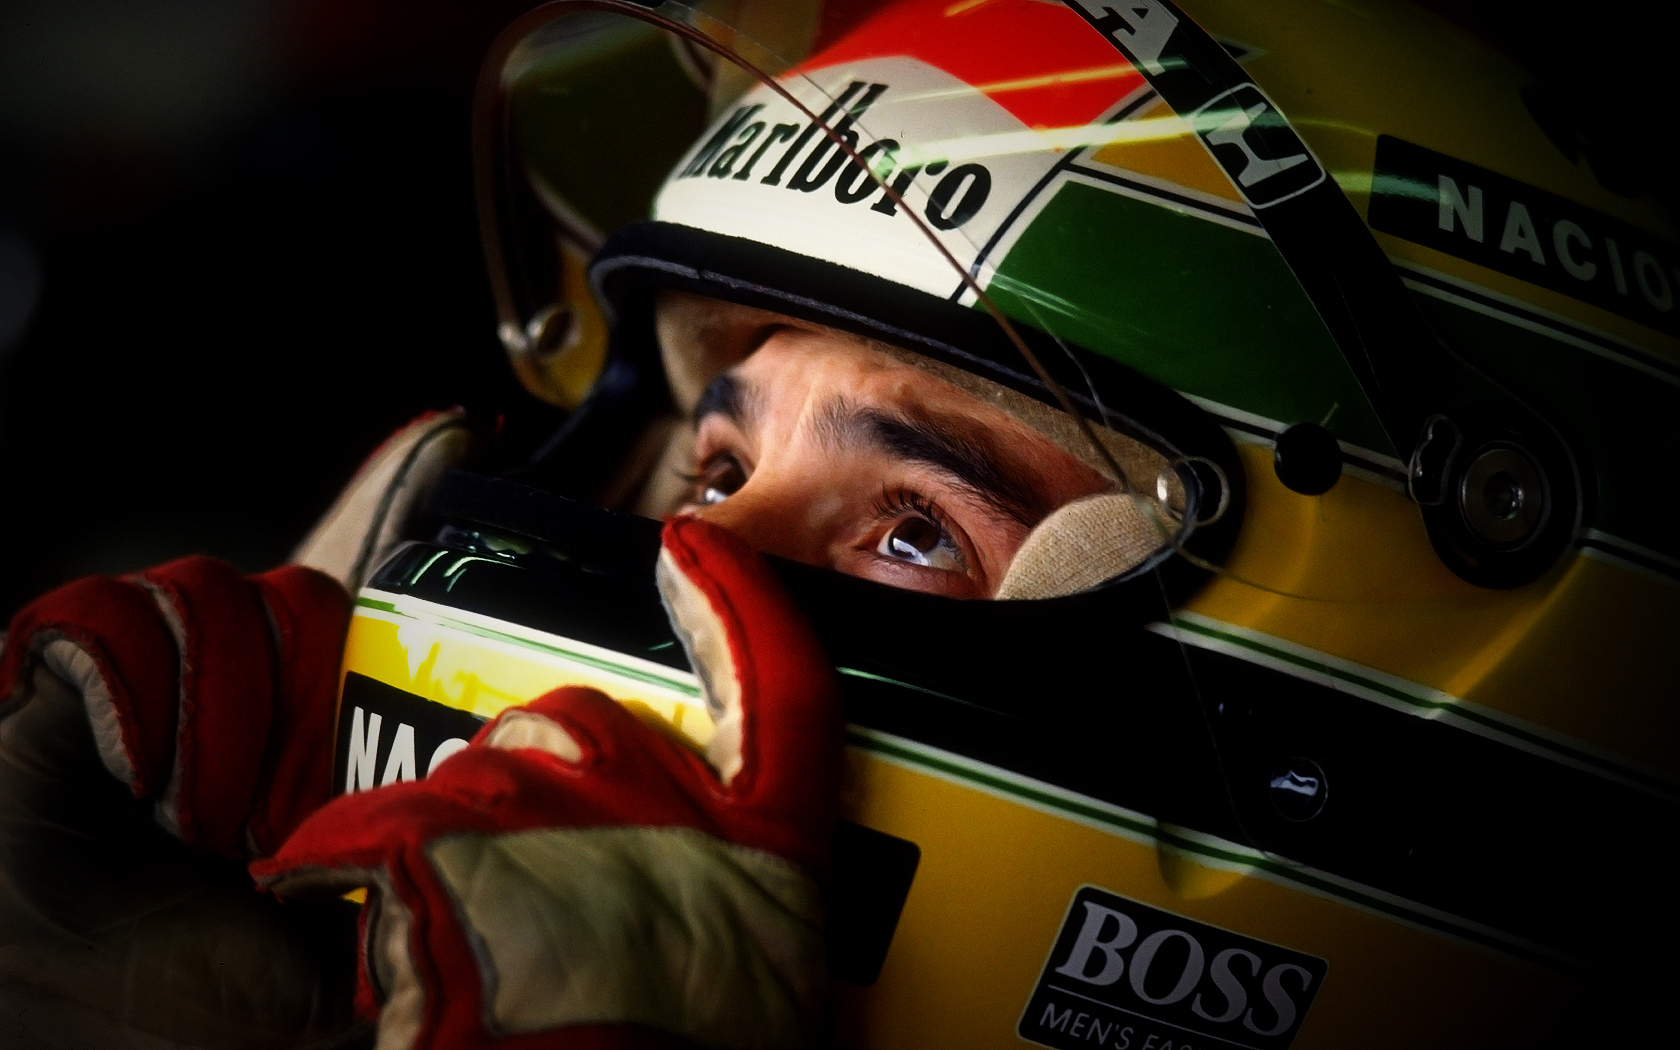 Ayrton Senna Wallpaper 3 by JohnnySlowhand on